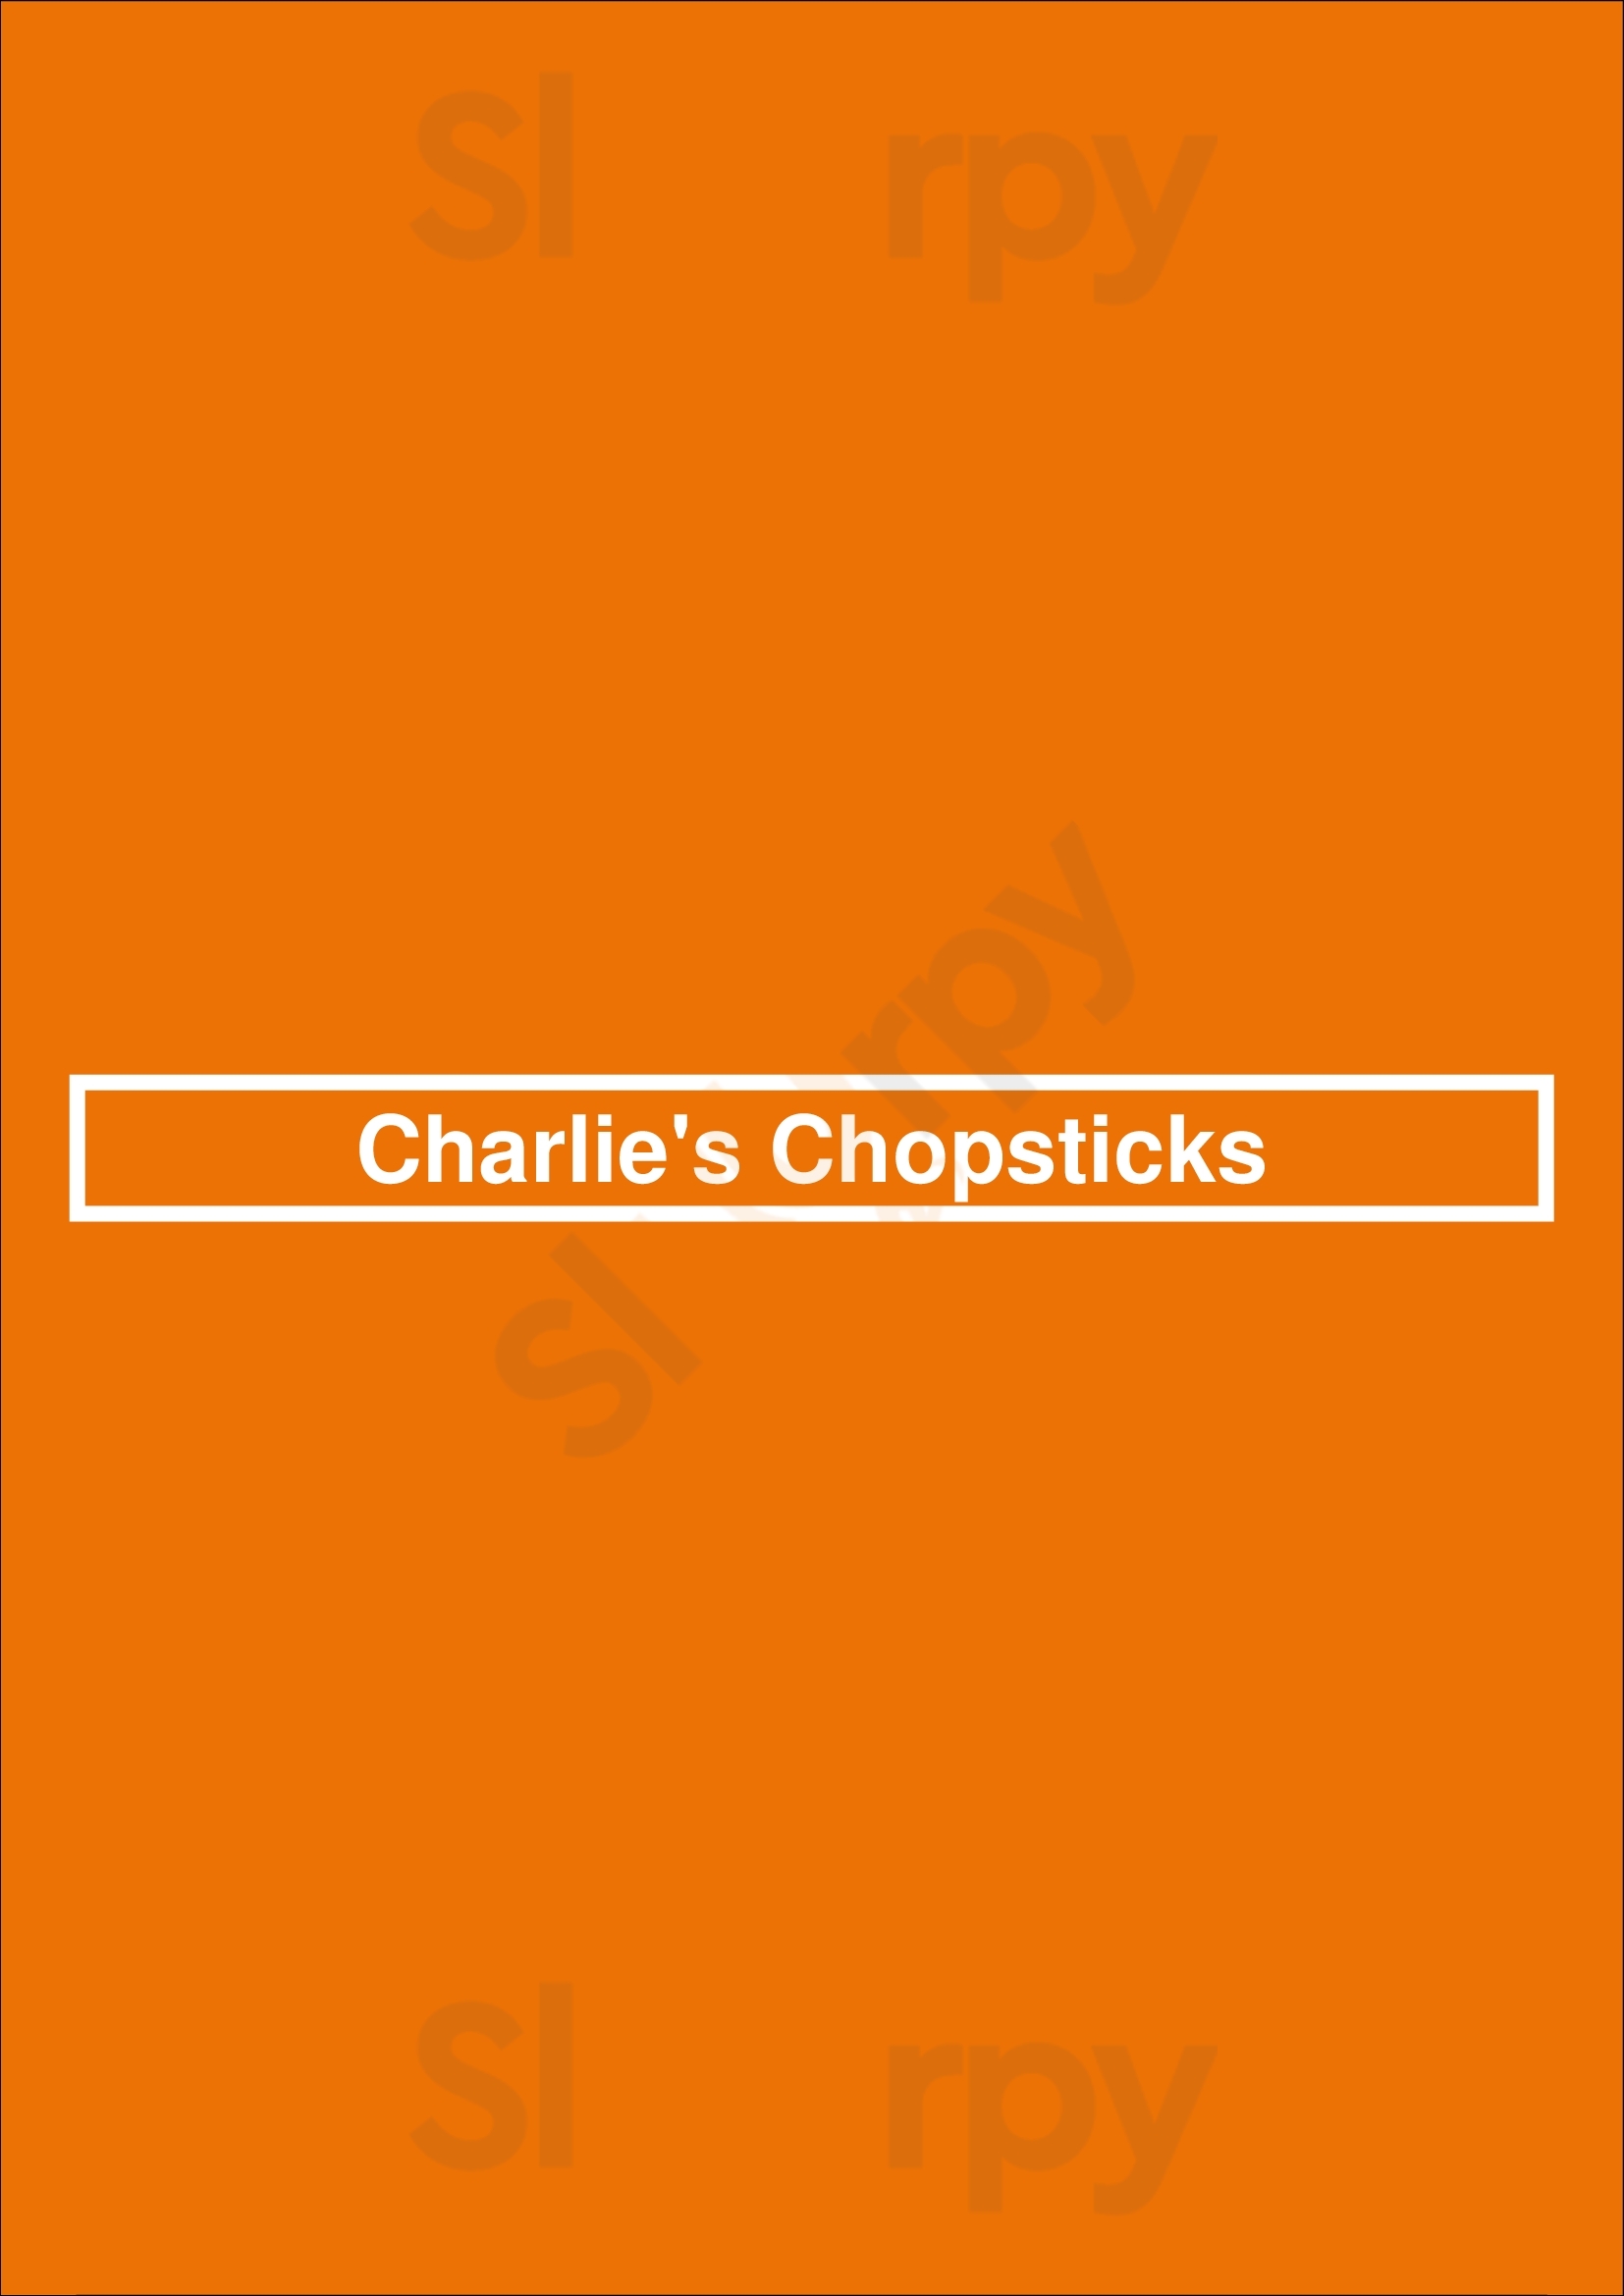 Charlie's Chopsticks Hamilton Menu - 1